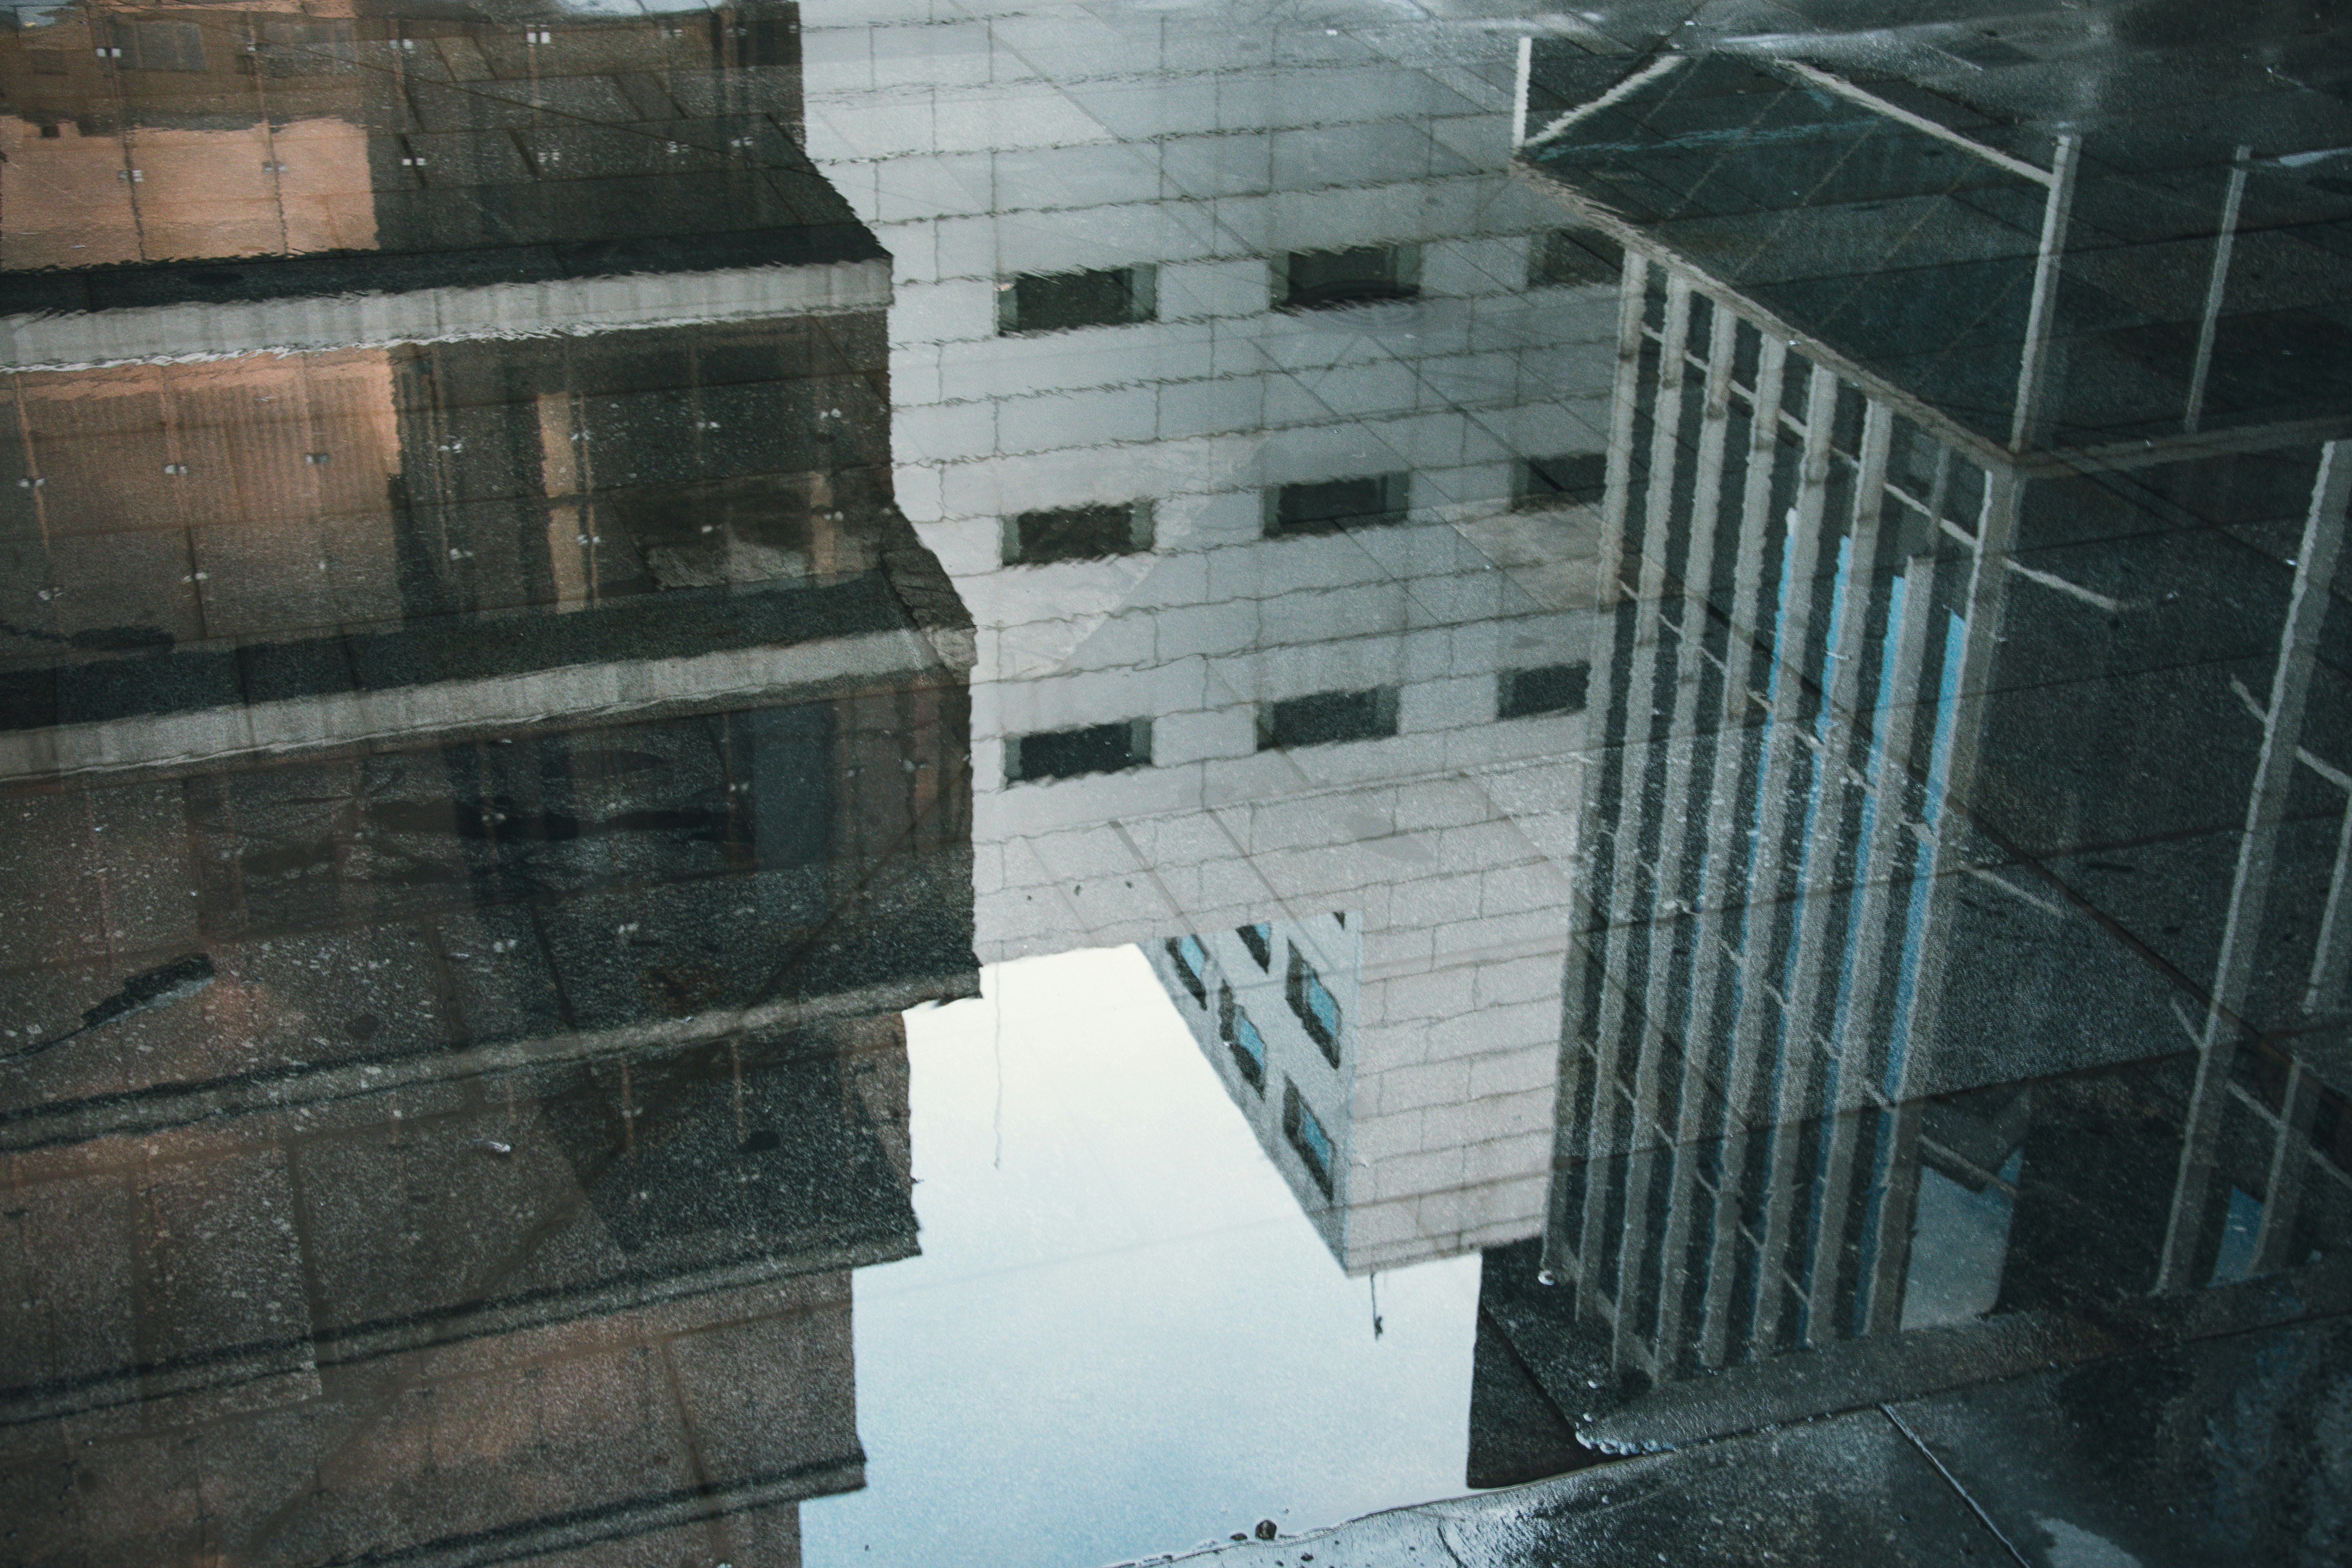 reflection of buildings in water on floor